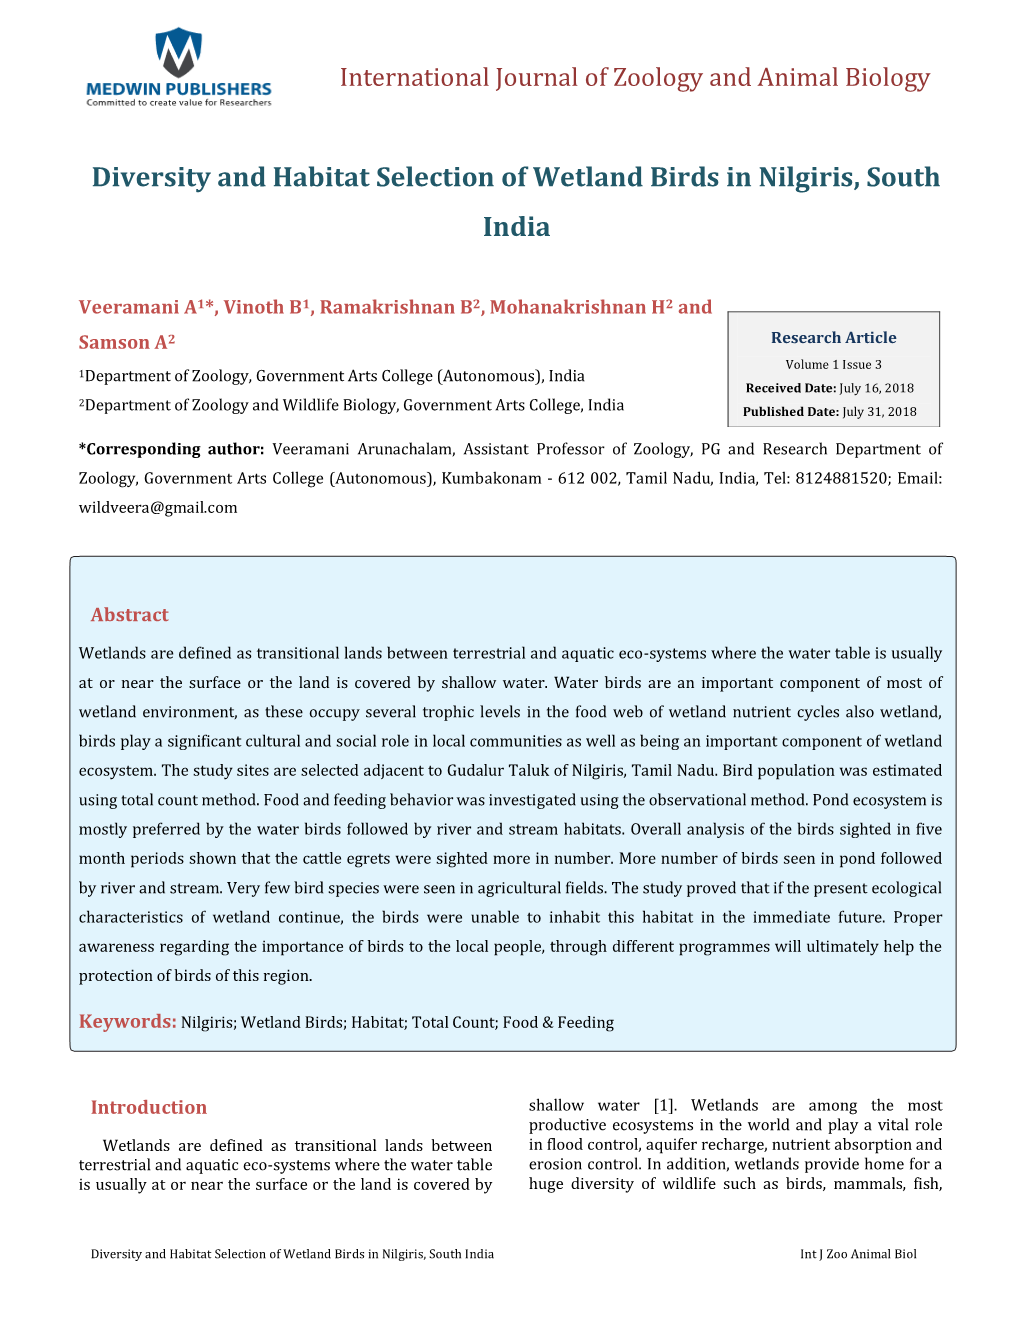 Diversity and Habitat Selection of Wetland Birds in Nilgiris, South India